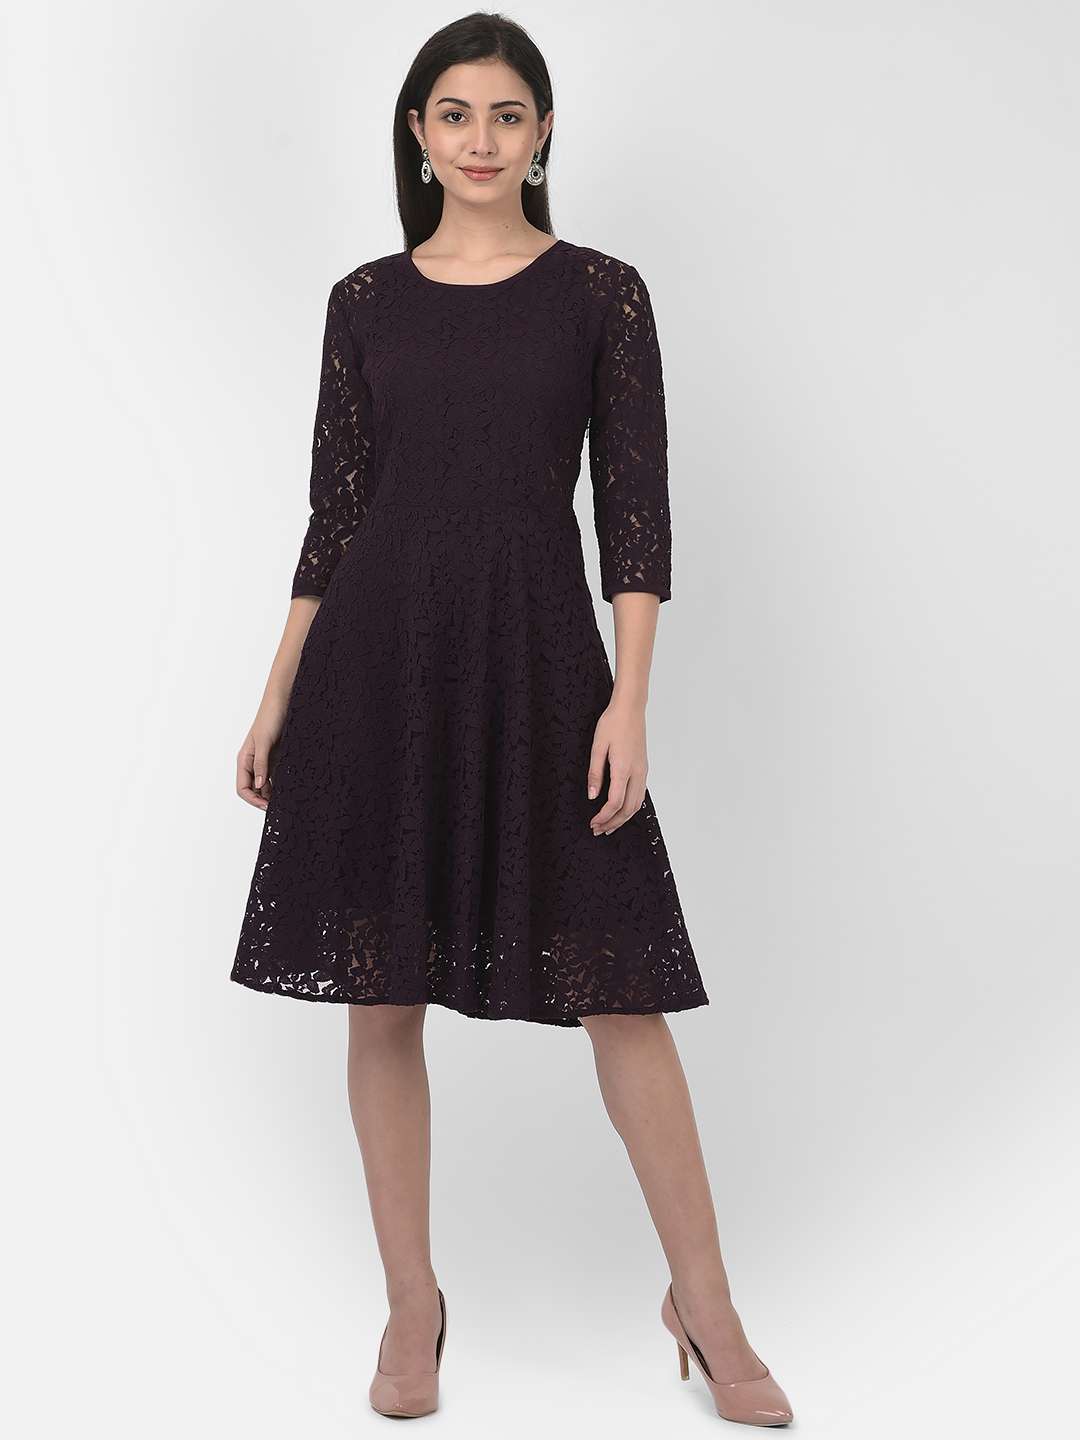 Eavan Burgundy Lace Fit & Flare Dress